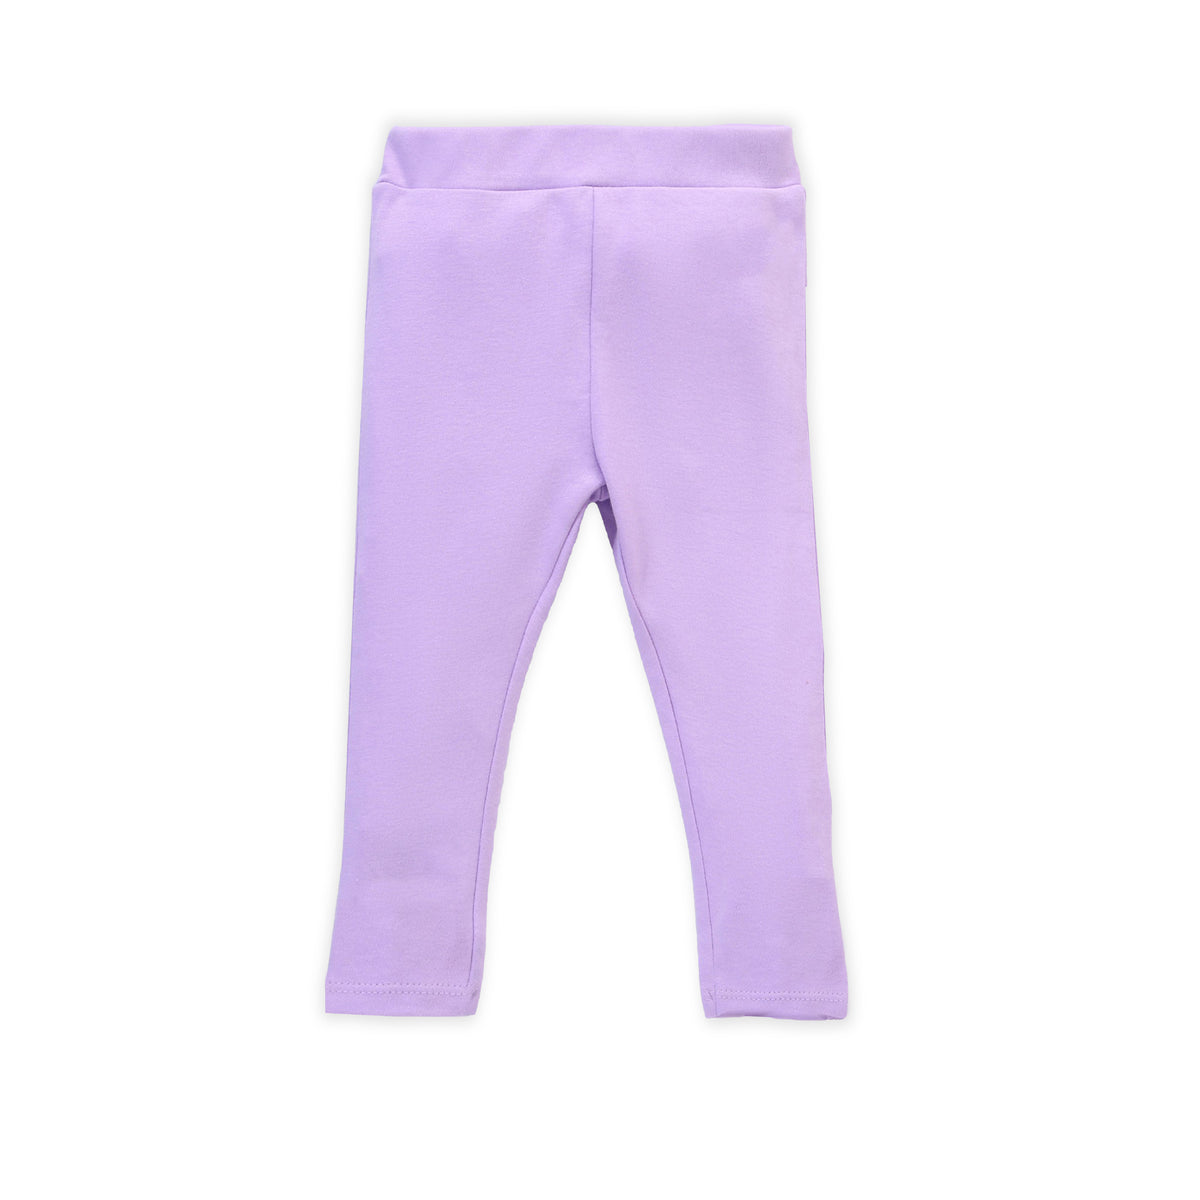 Kids Violet Solid Cotton Track pants